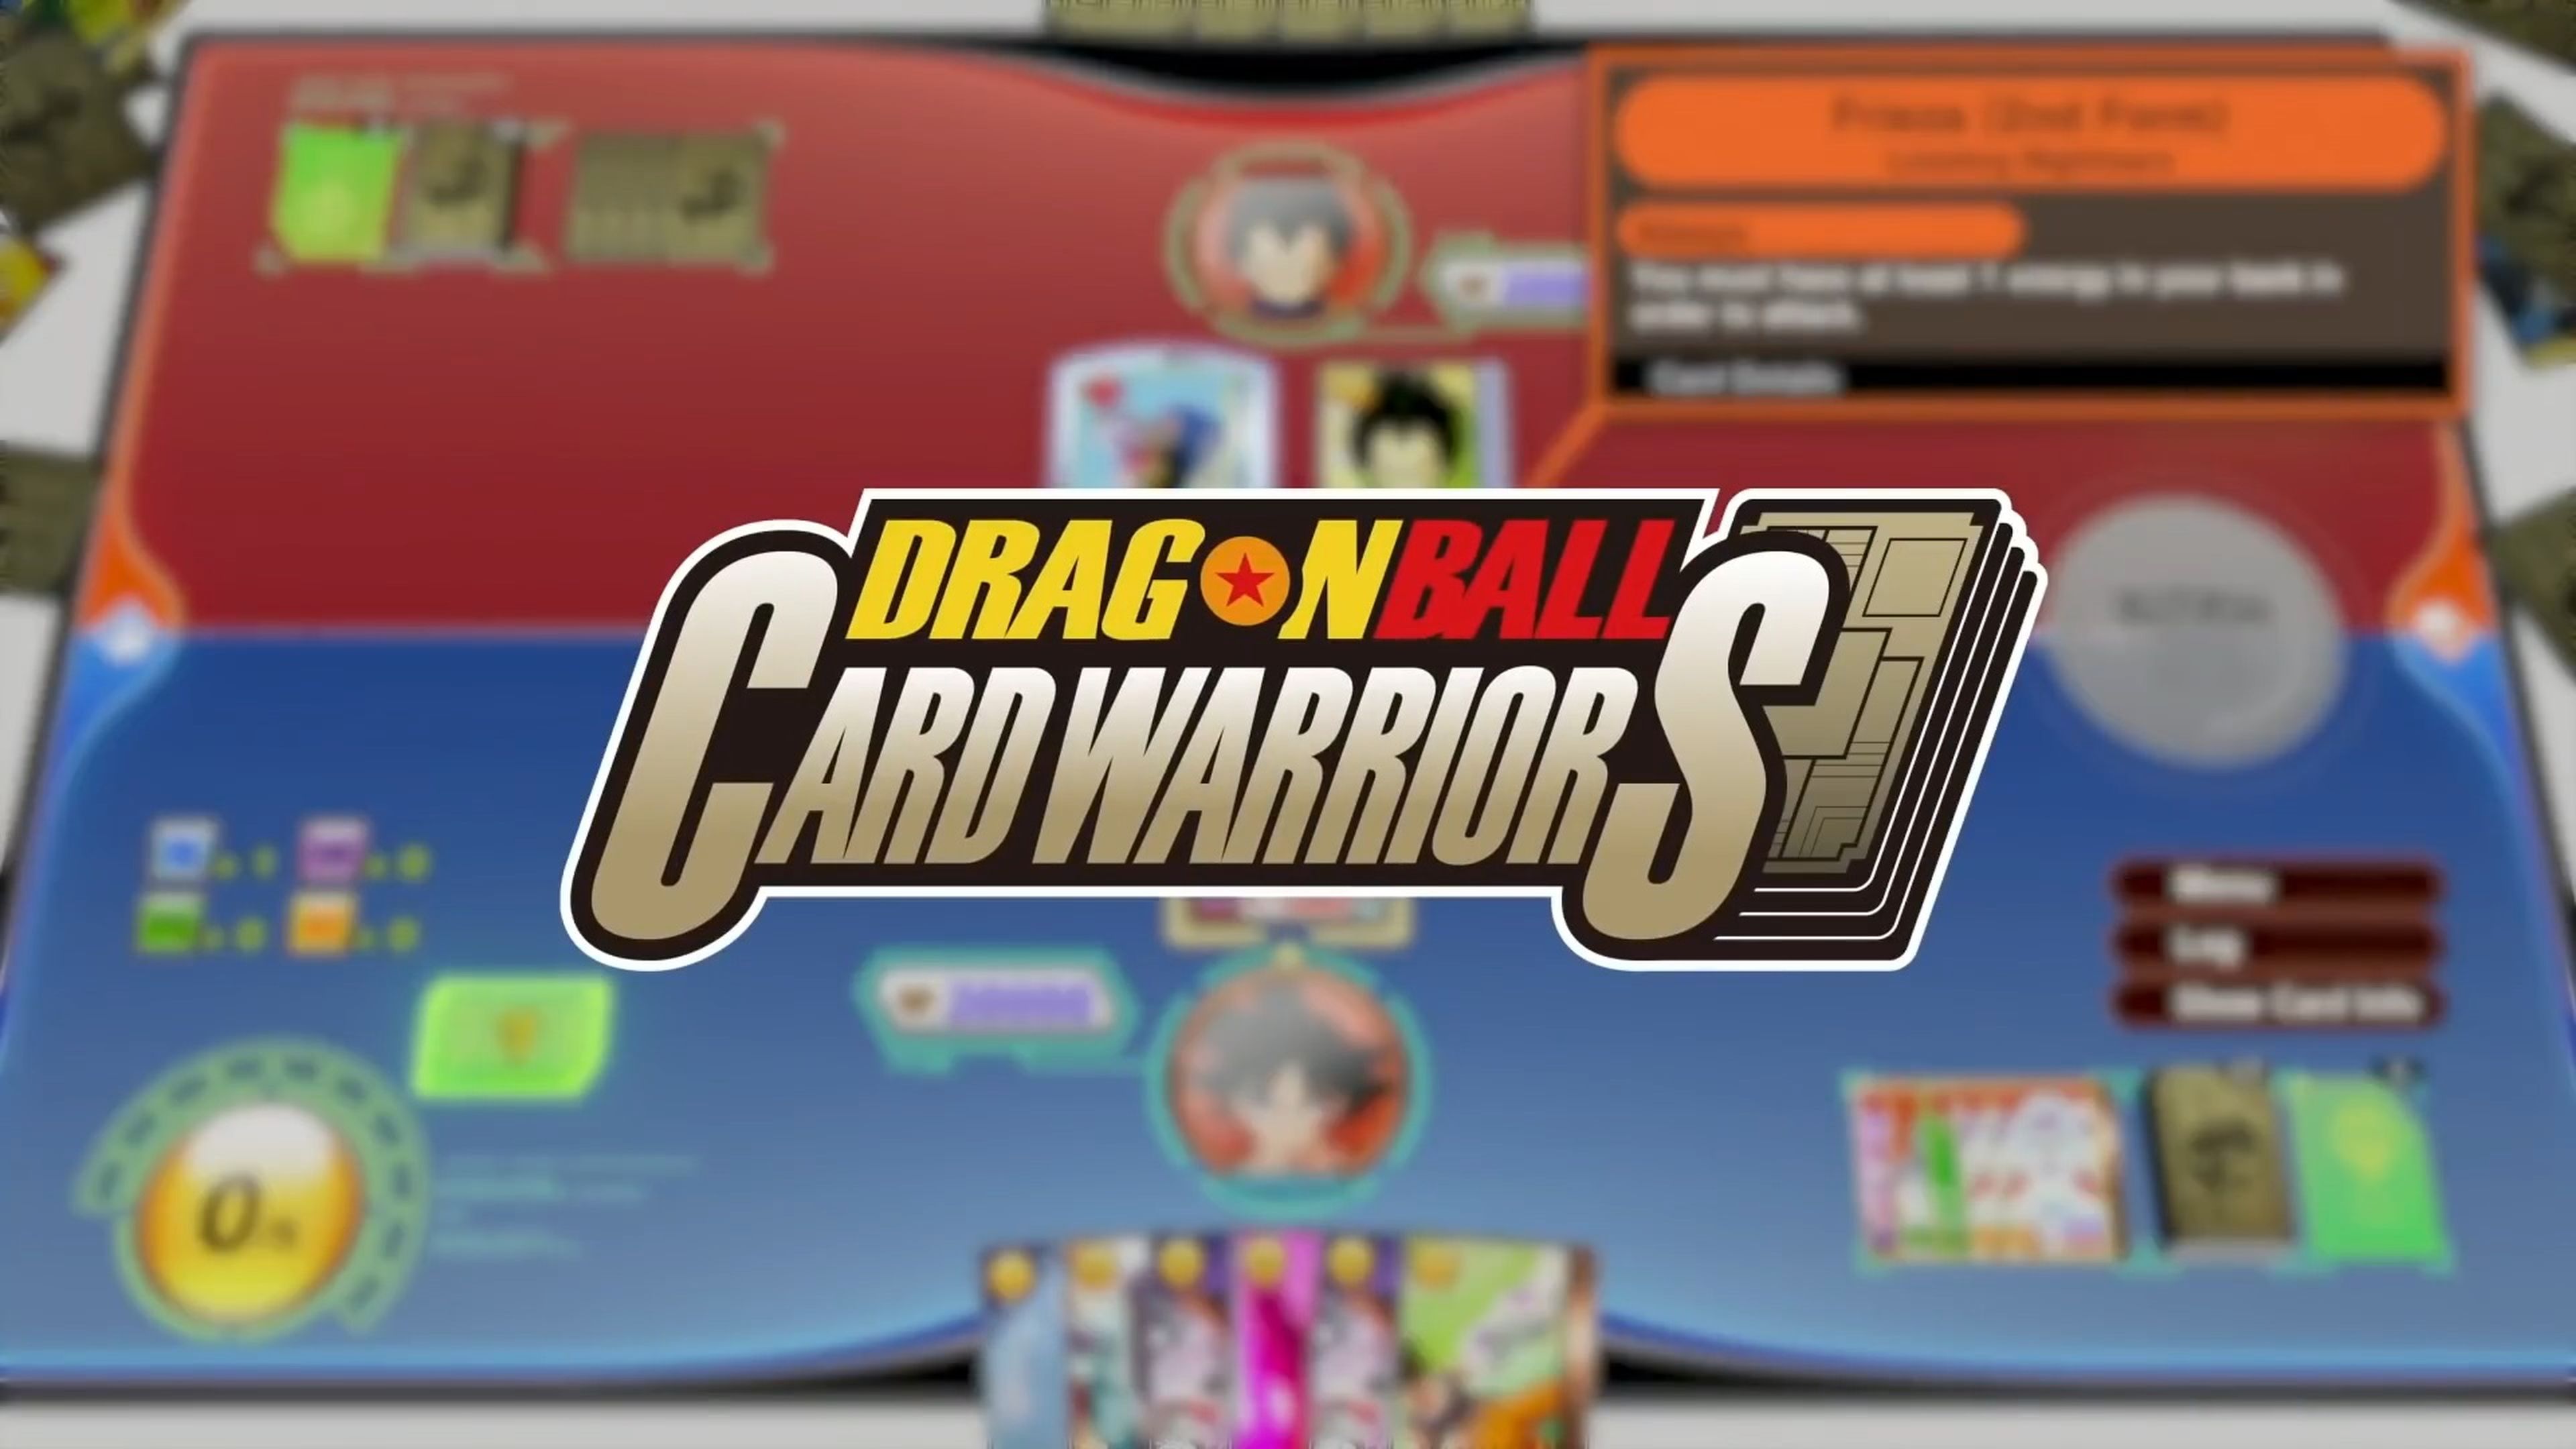 Dragon Ball card warriors